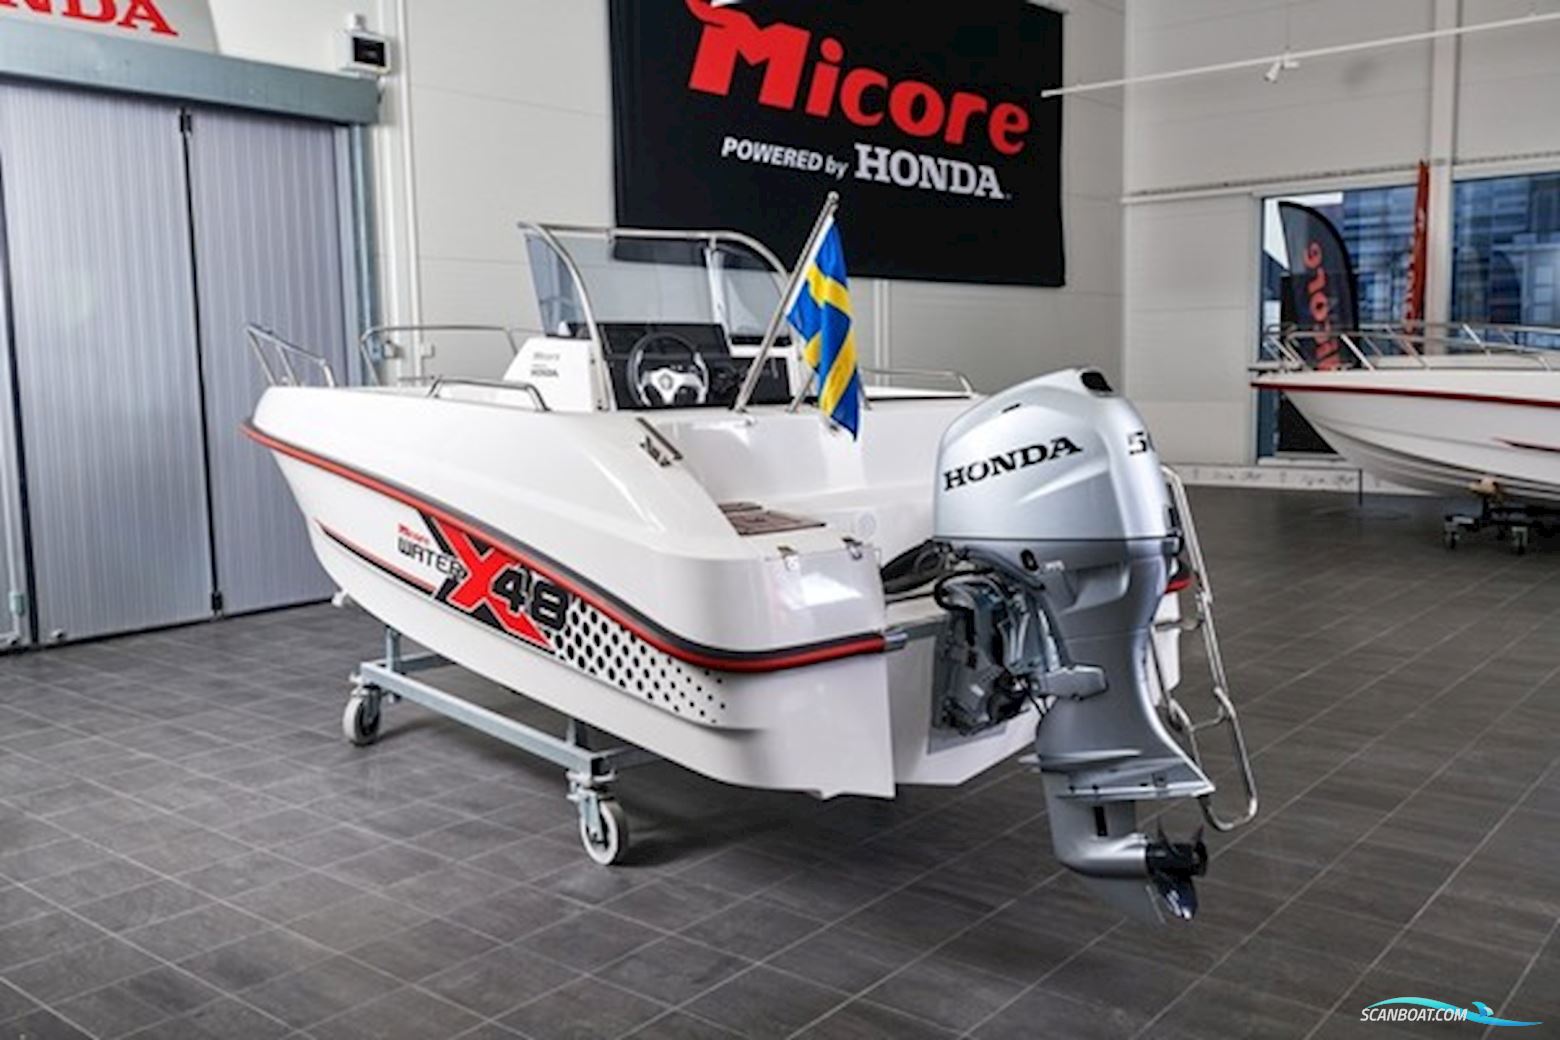 Micore 48 Xwsc (Standard Båd Uden Motor) Motorbåt 2020, Danmark